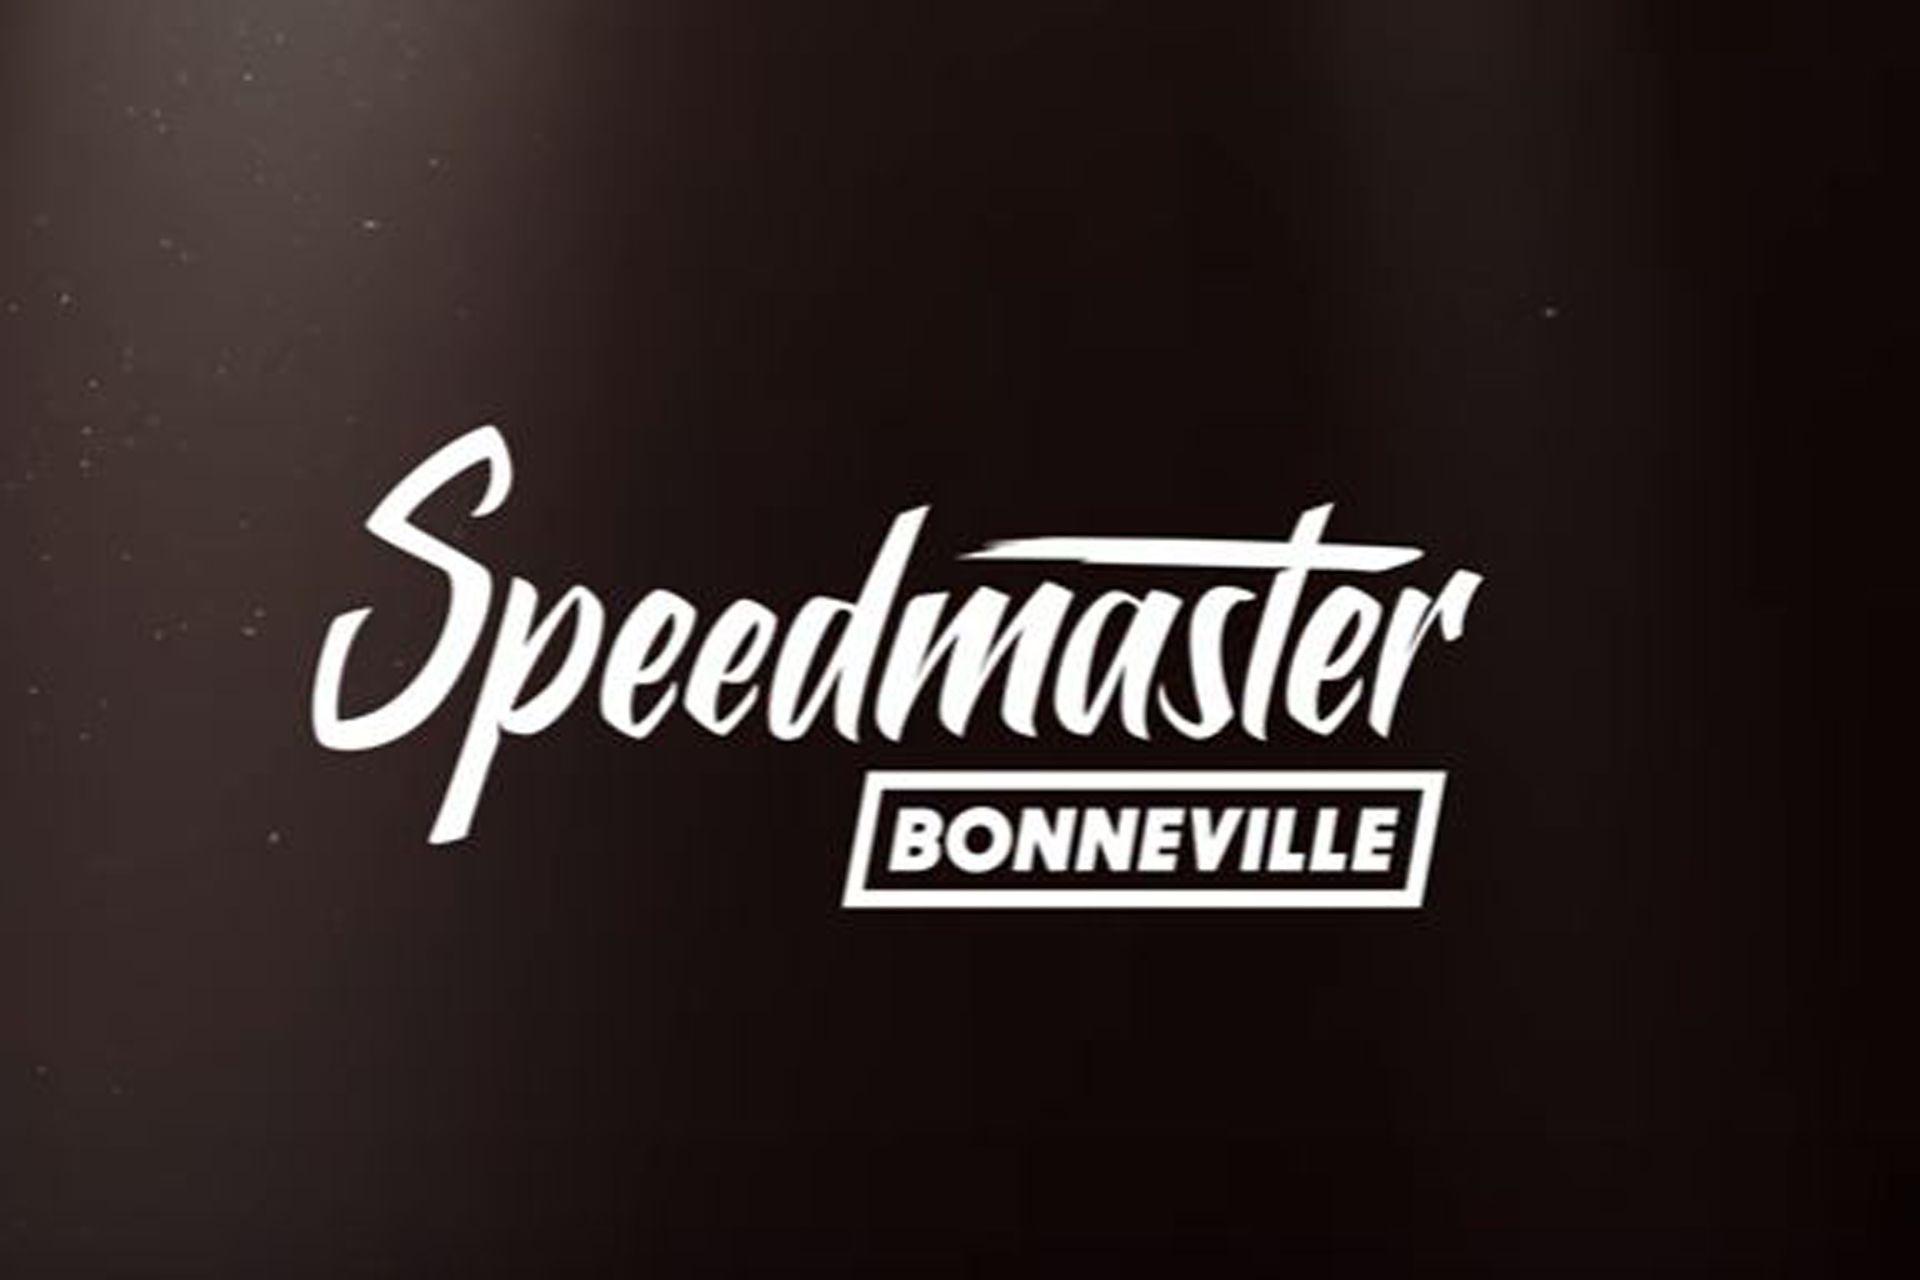 New Triumph Logo - New Triumph Bonneville Speedmaster, UK unveil on October 3